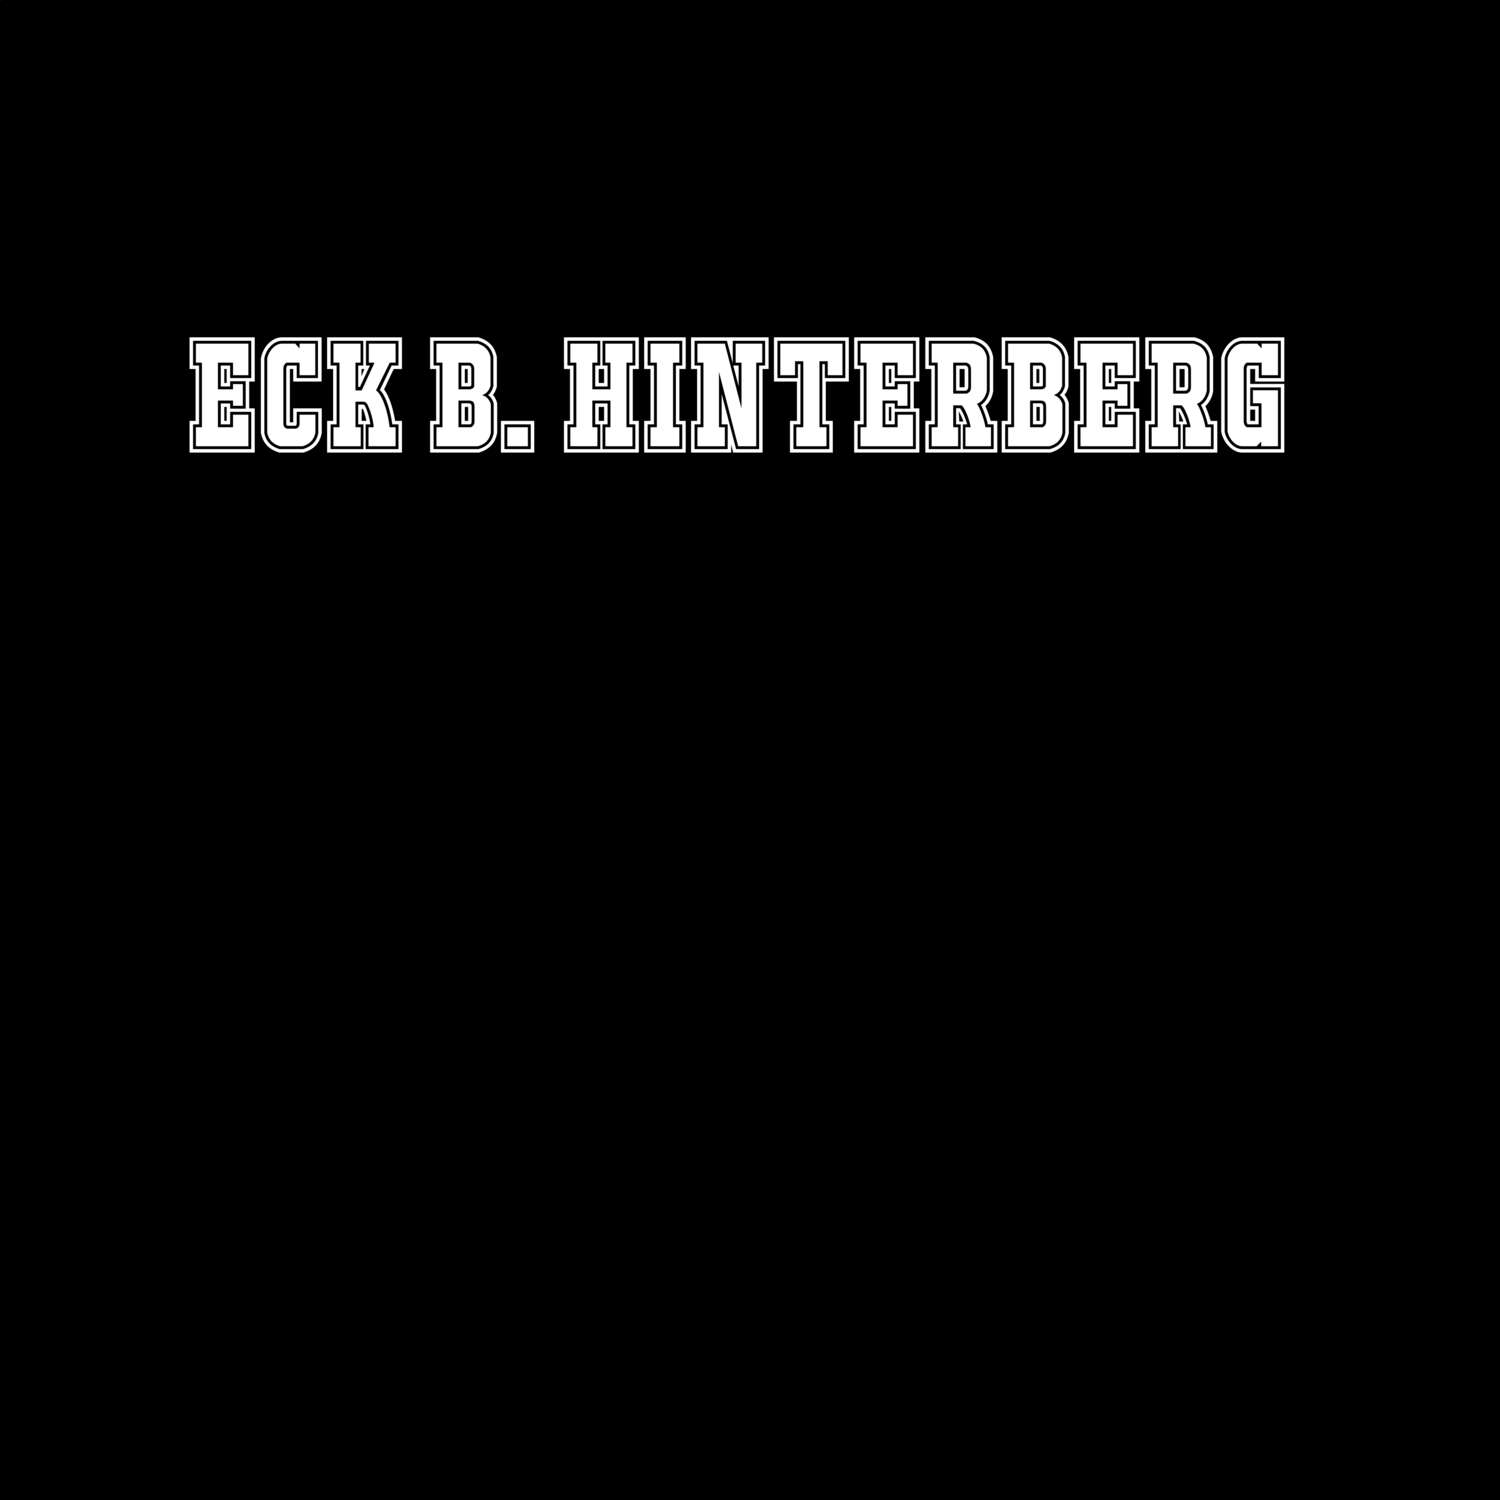 Eck b. Hinterberg T-Shirt »Classic«